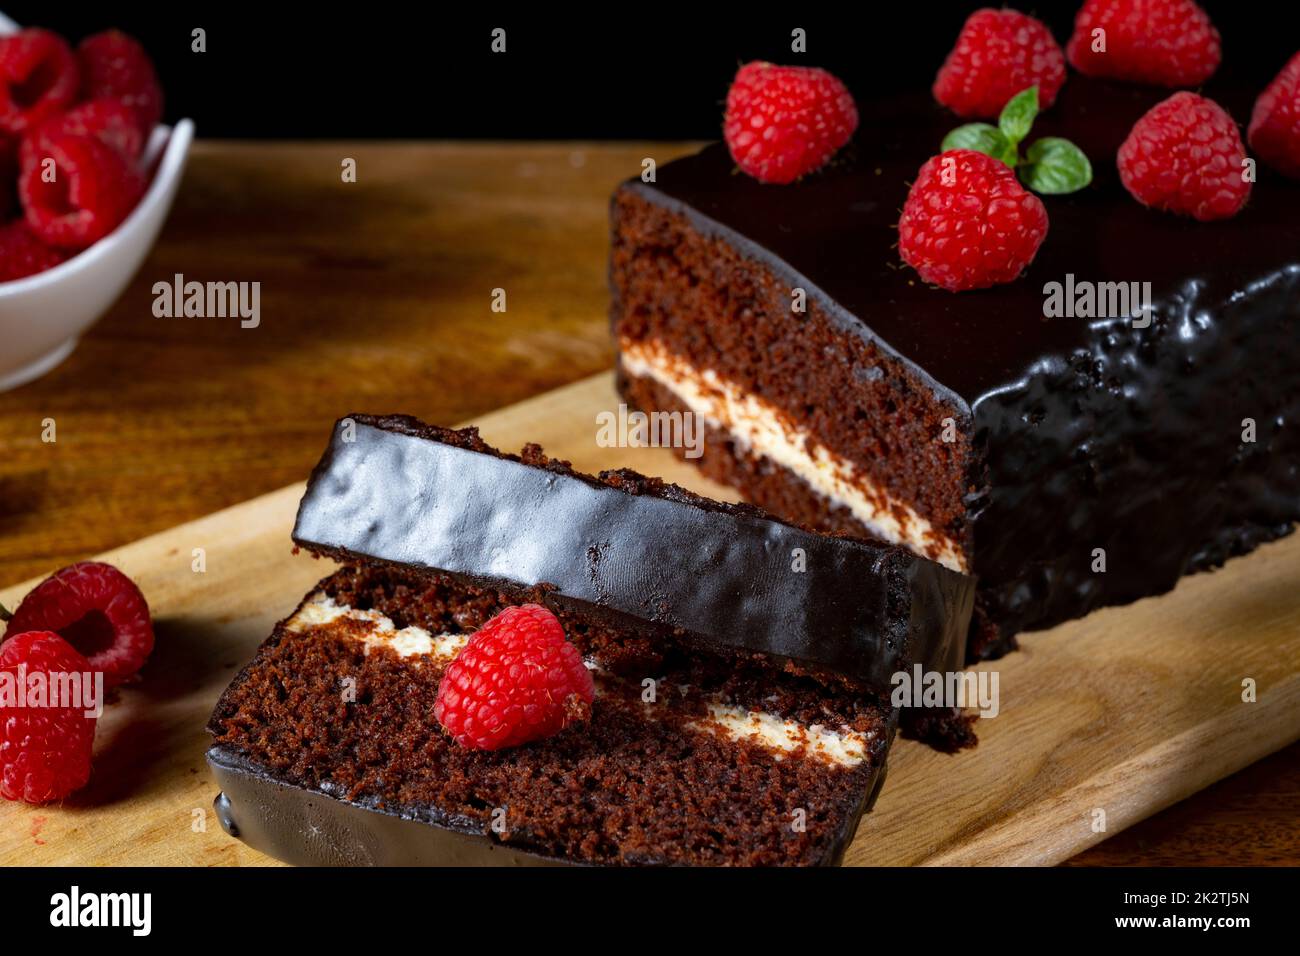 Chocolate cake with raspberries and coffee Stock Photo